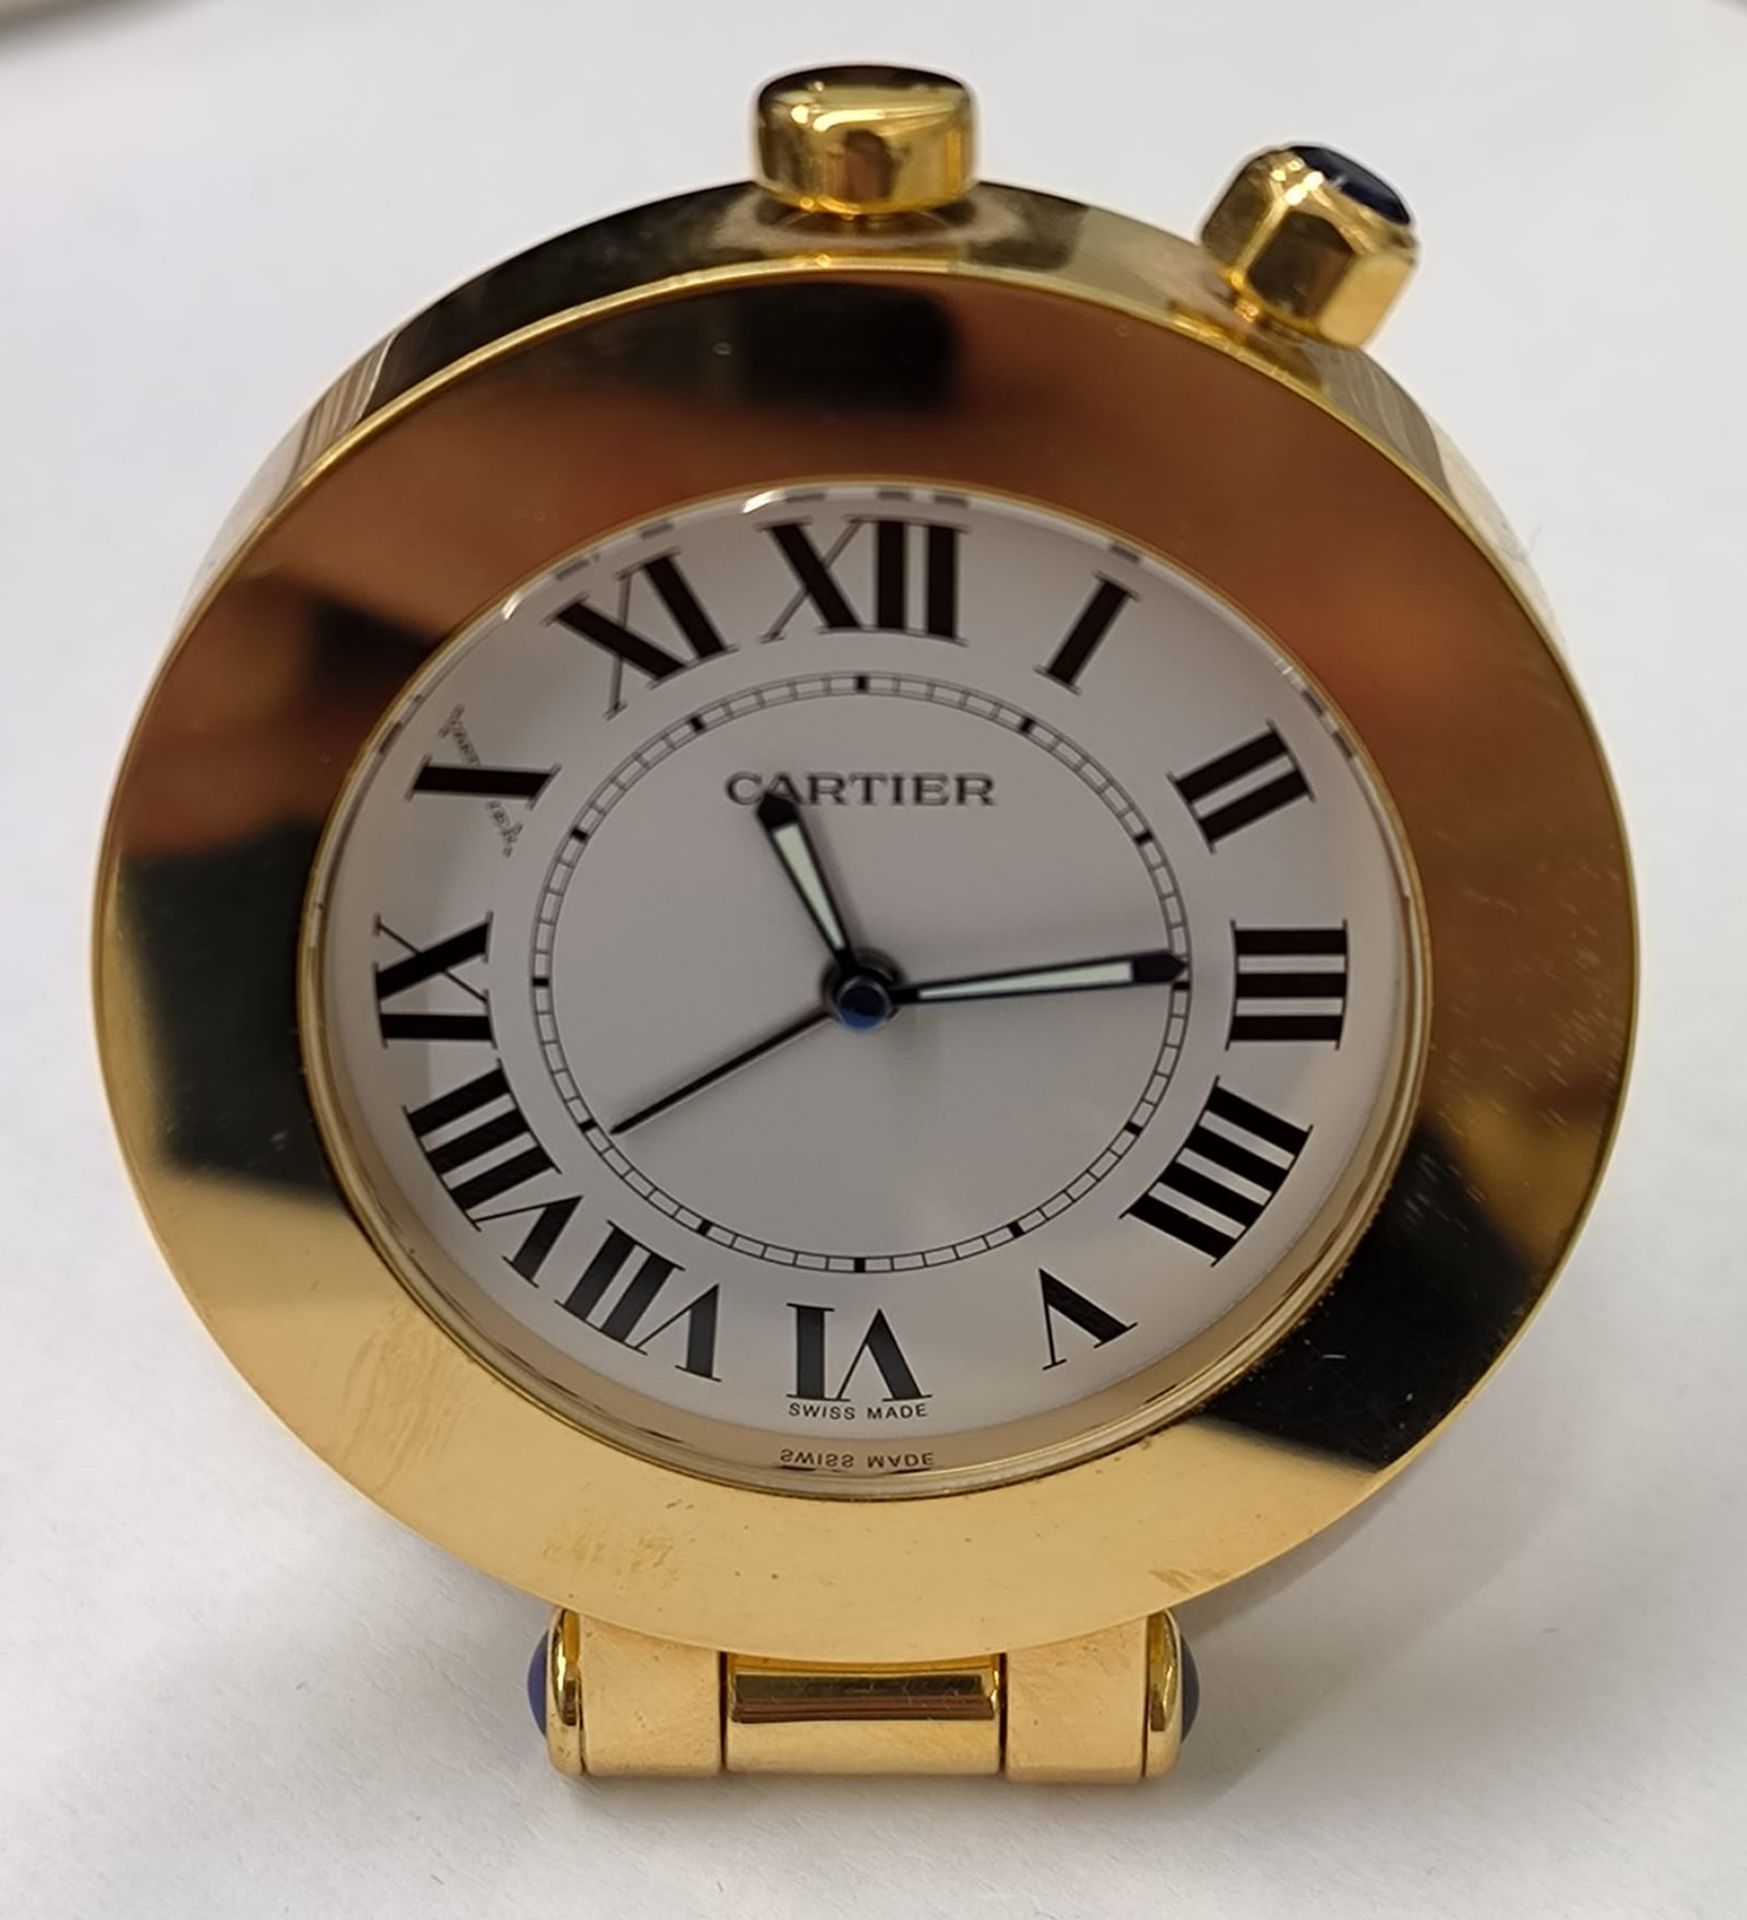 Cartier travel watch, 20th century